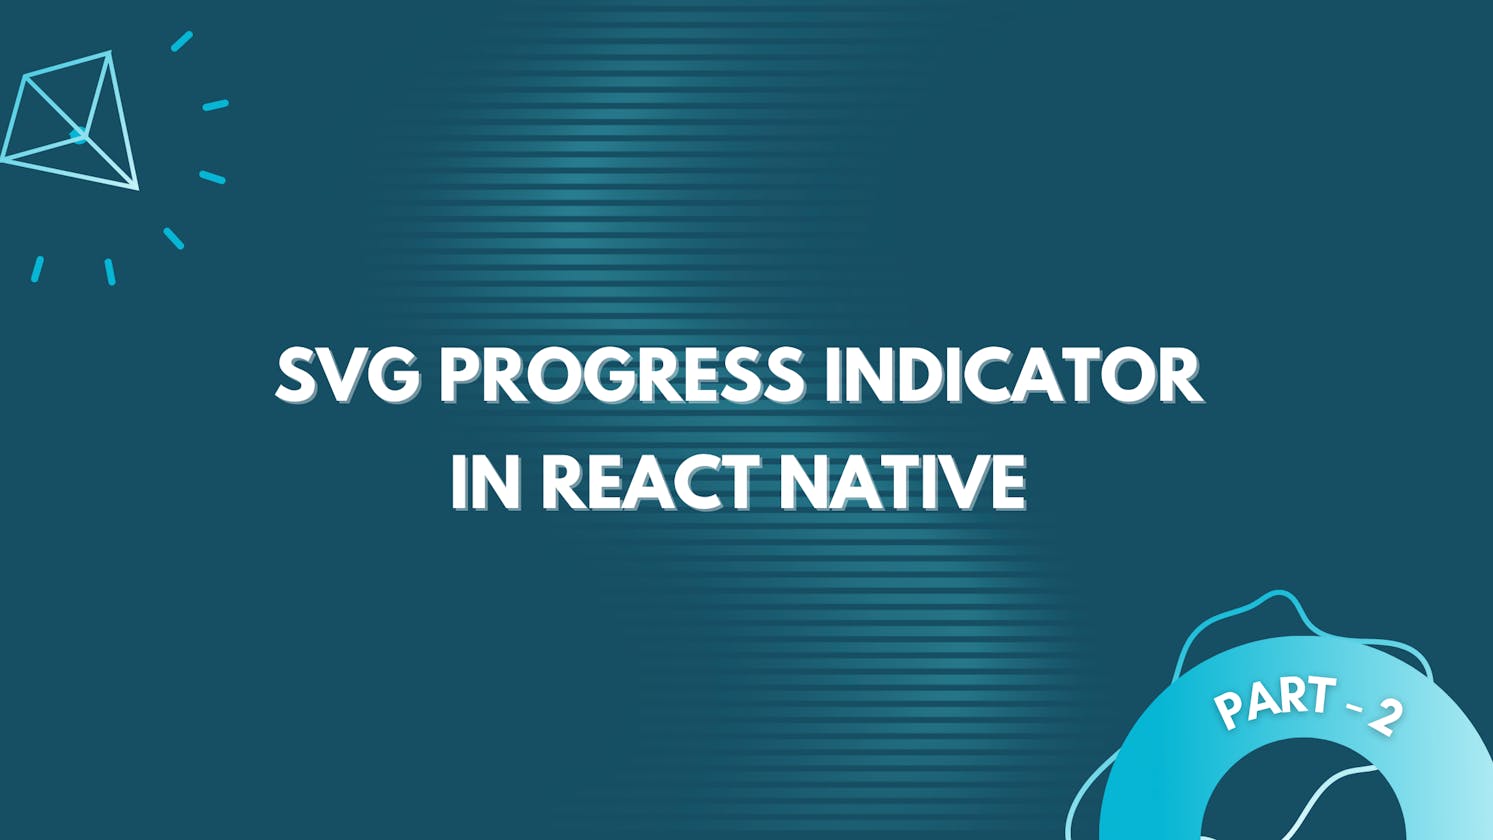 SVG progress indicator in react native - Part 2